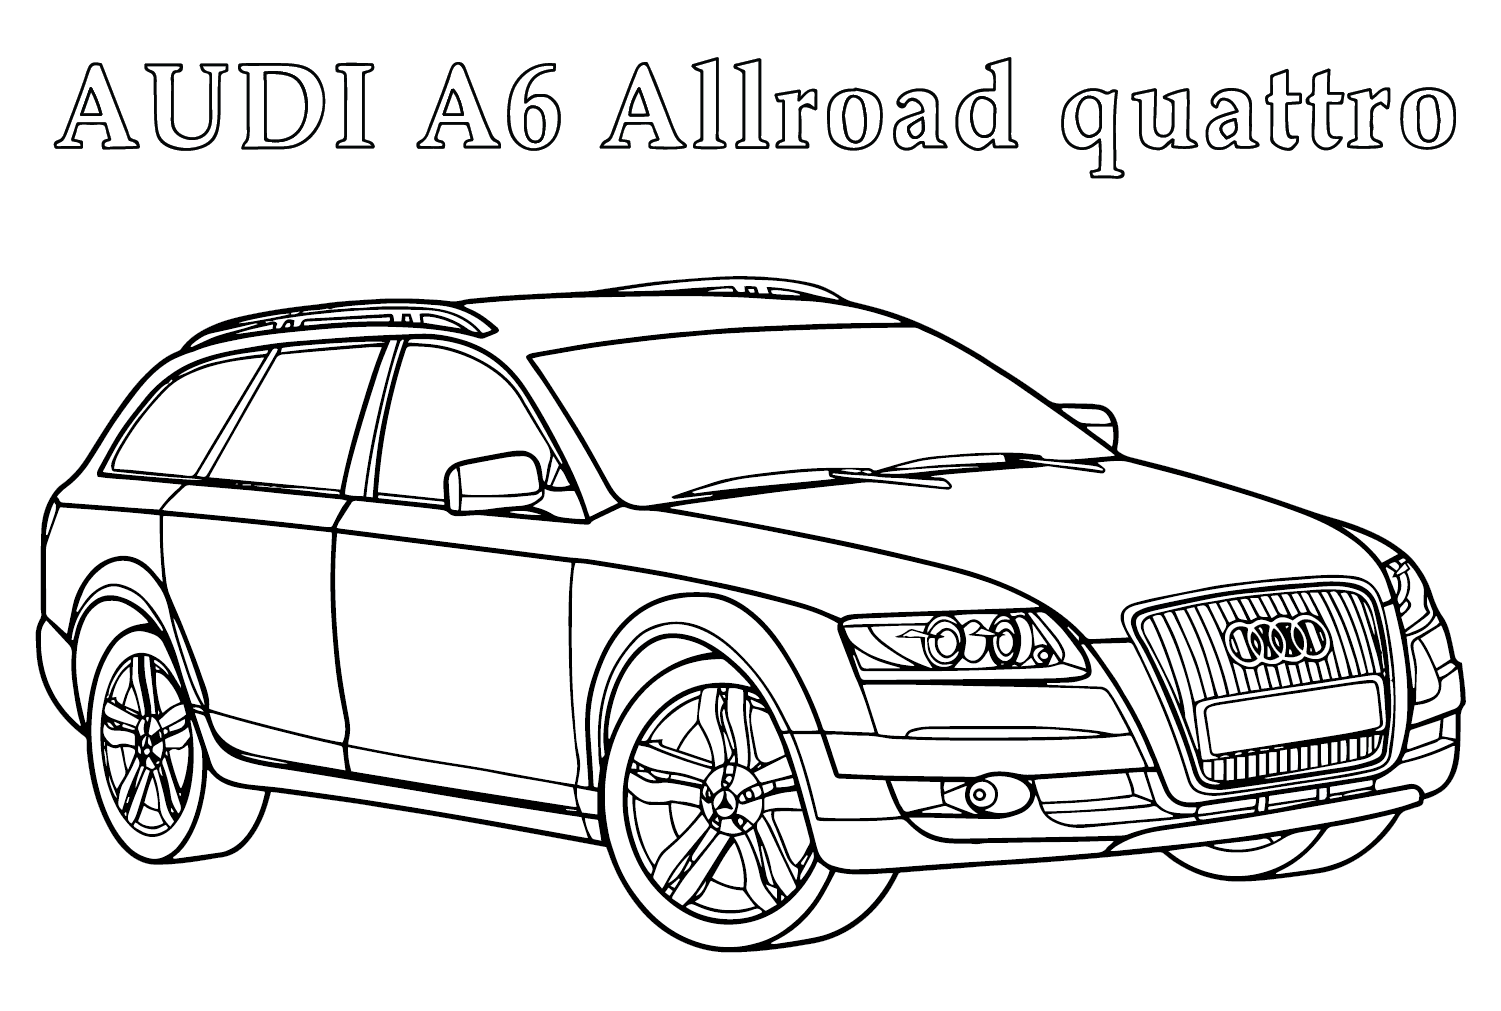 Audi A6 Allroad Quattro from Audi